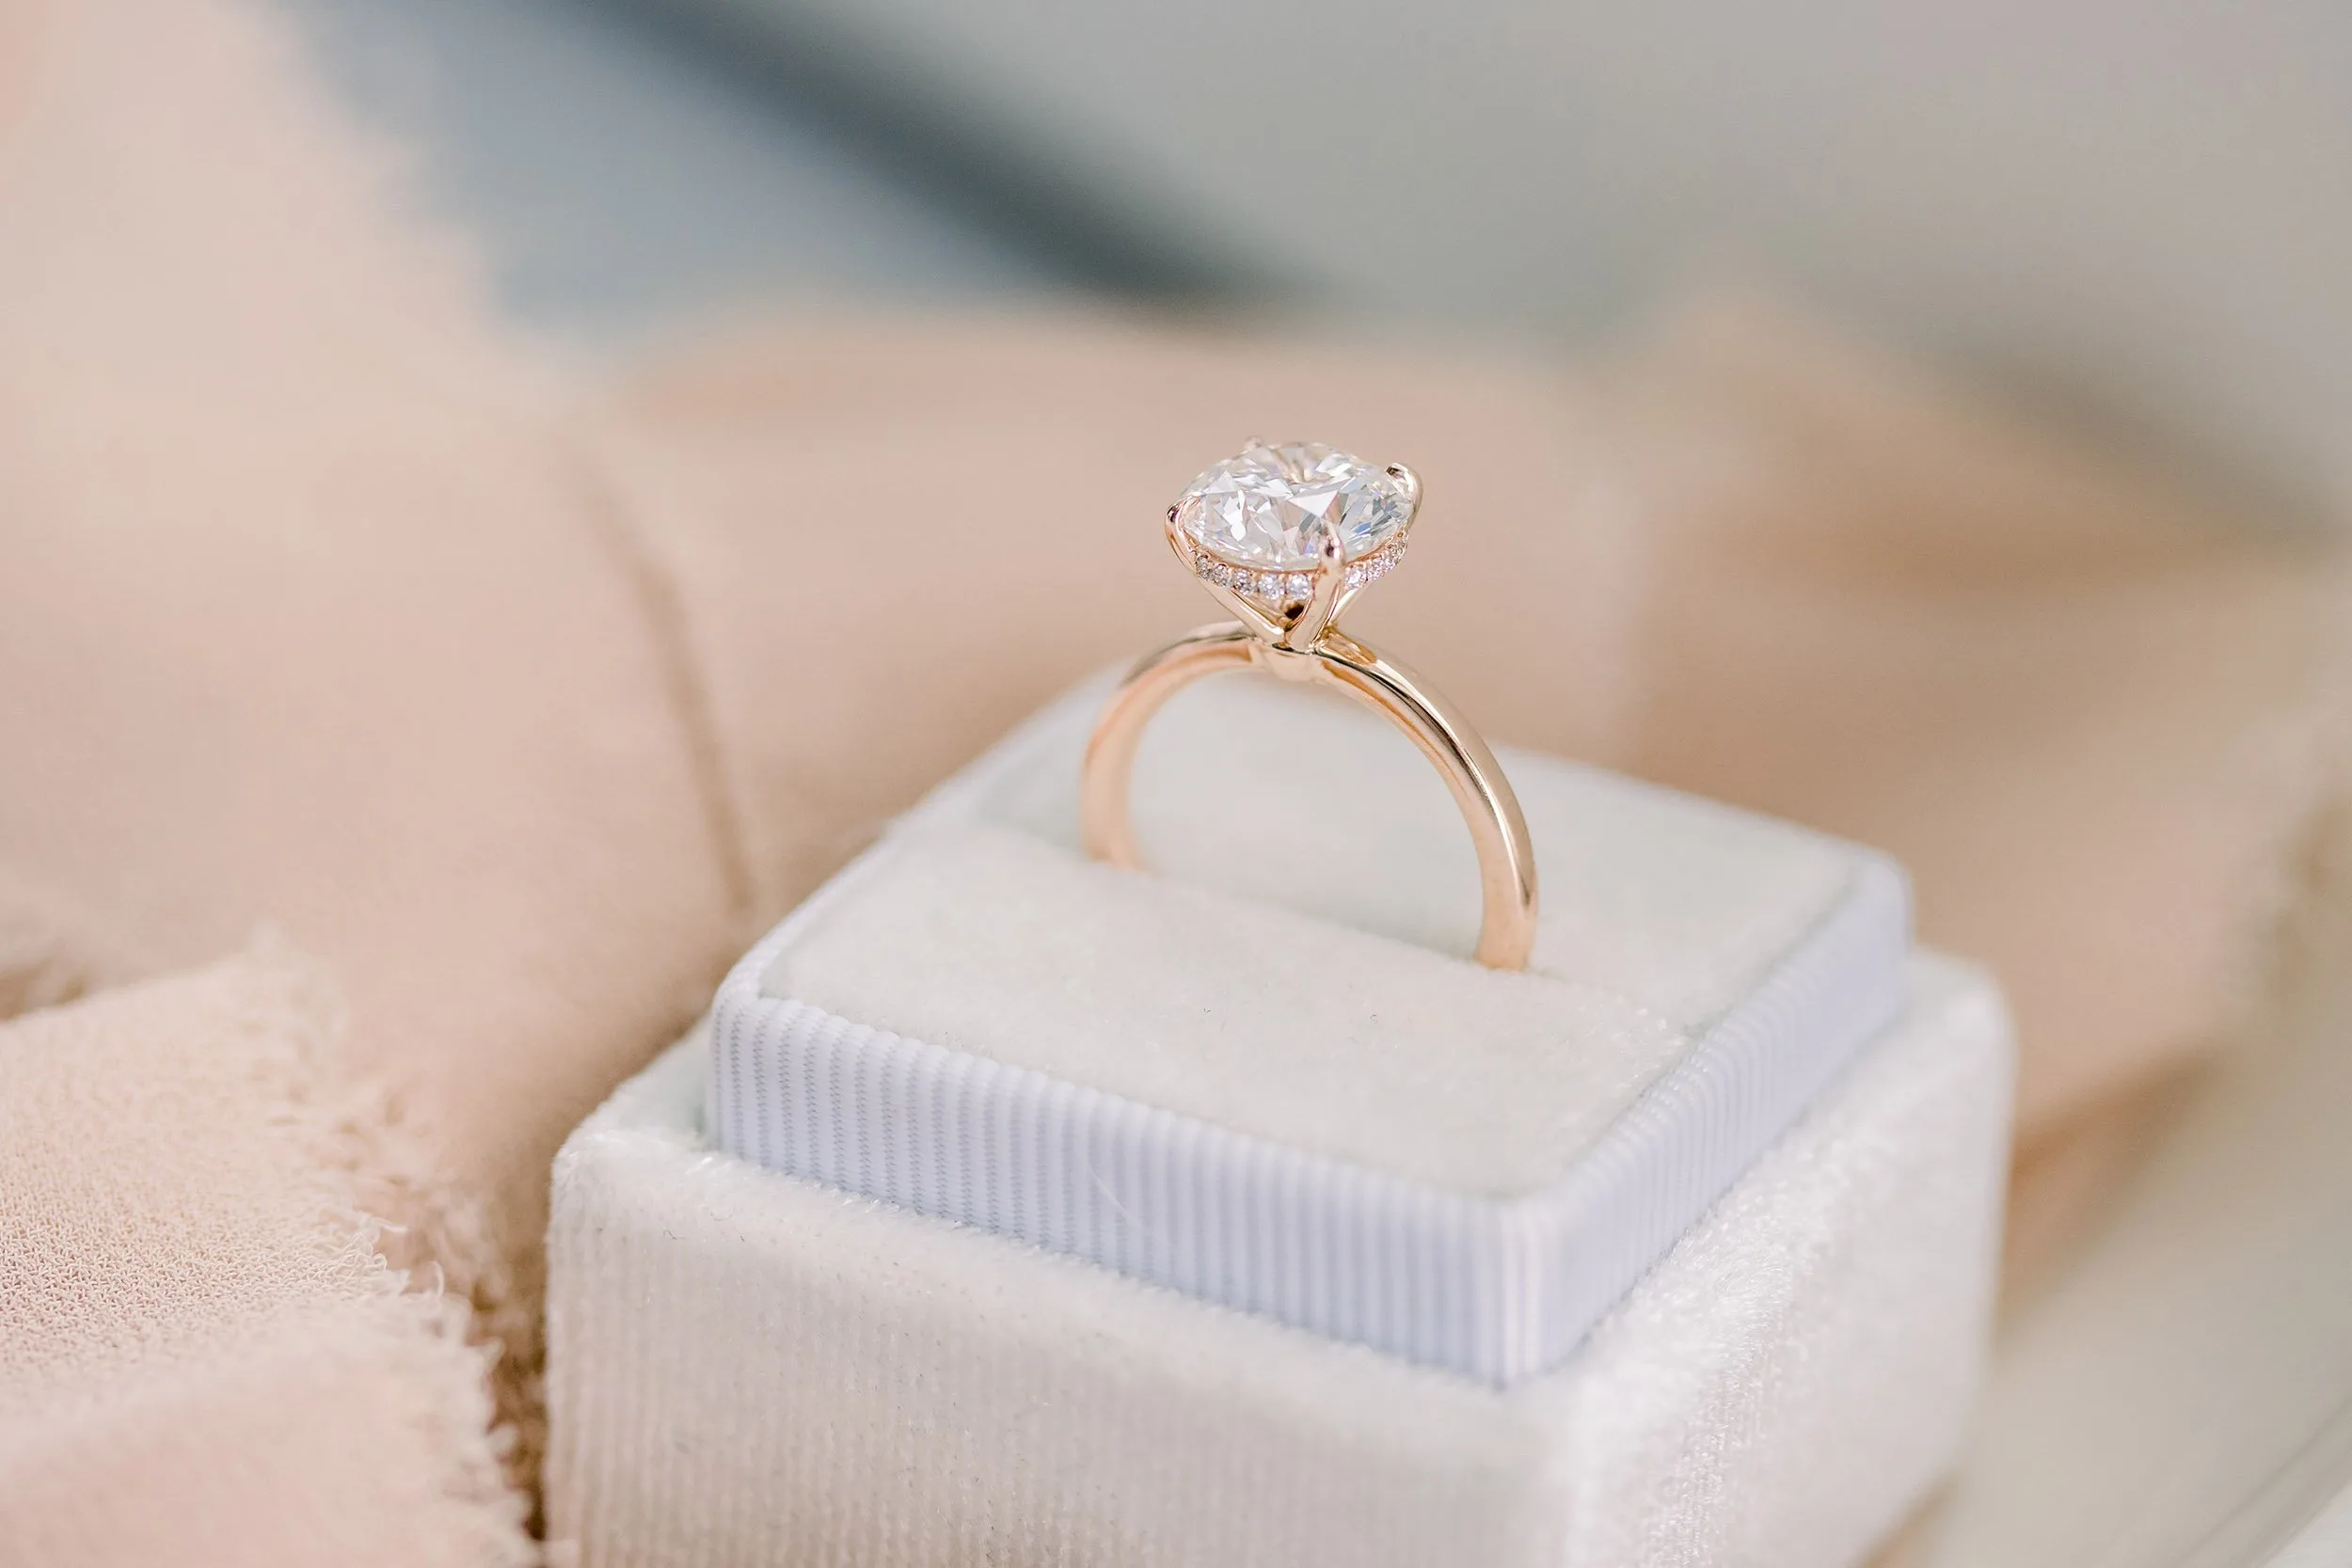 Shop Women's Daily Wear 18K Rose Gold Diamond Rings from PC Chandra